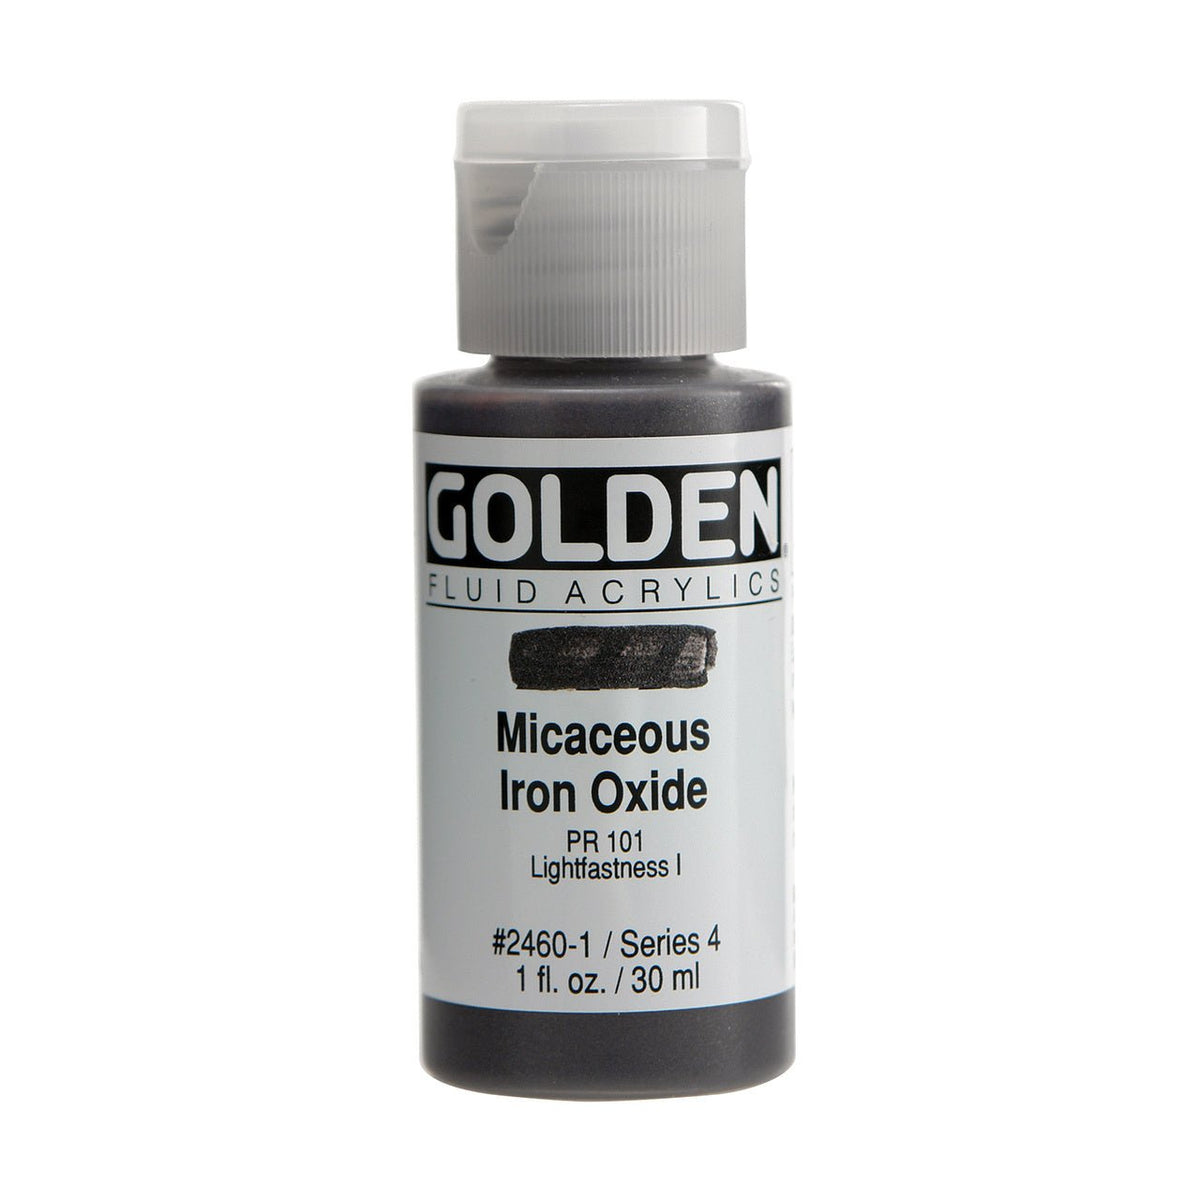 Golden Fluid Acrylic Micaceous Iron Oxide 1 oz - merriartist.com